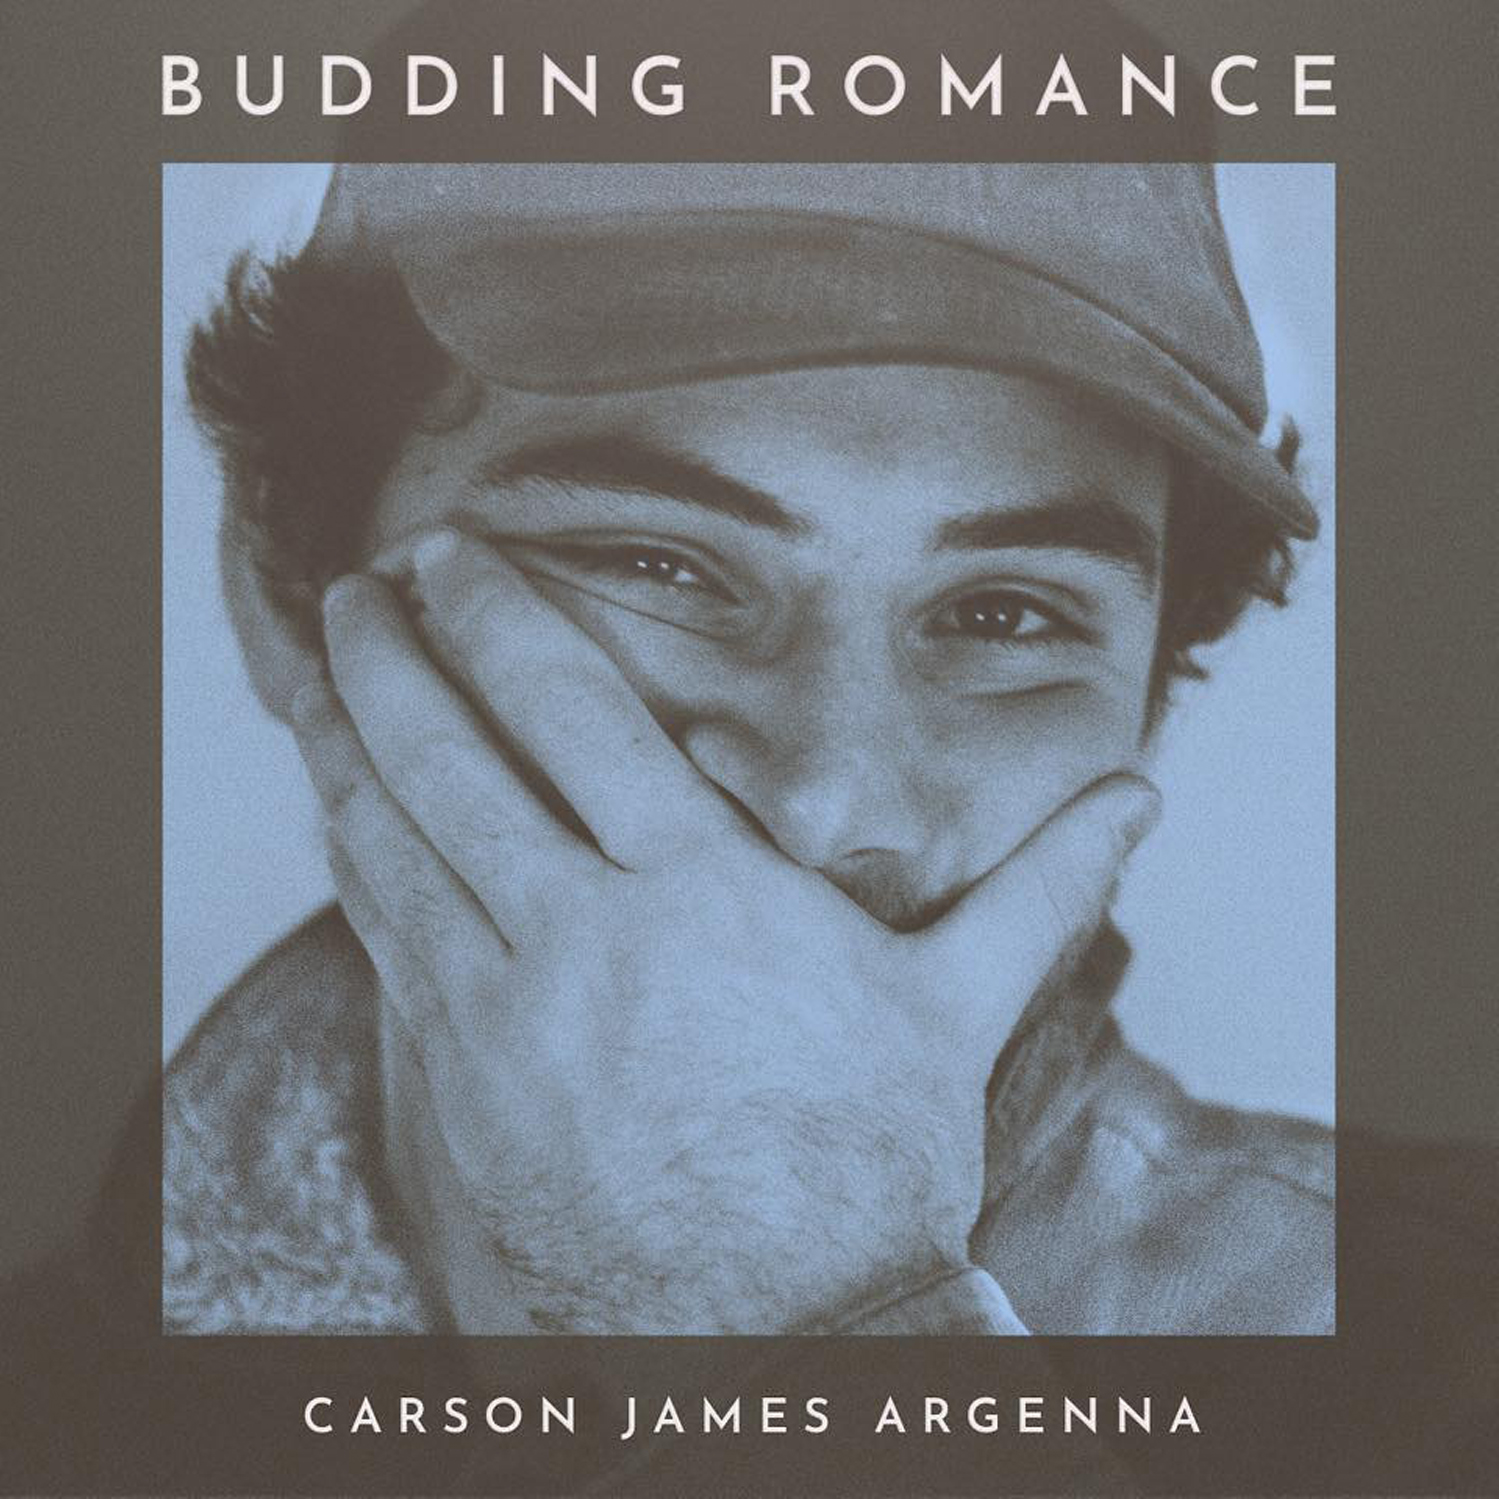 Carson James Argenna - Budding Romance Single Cover